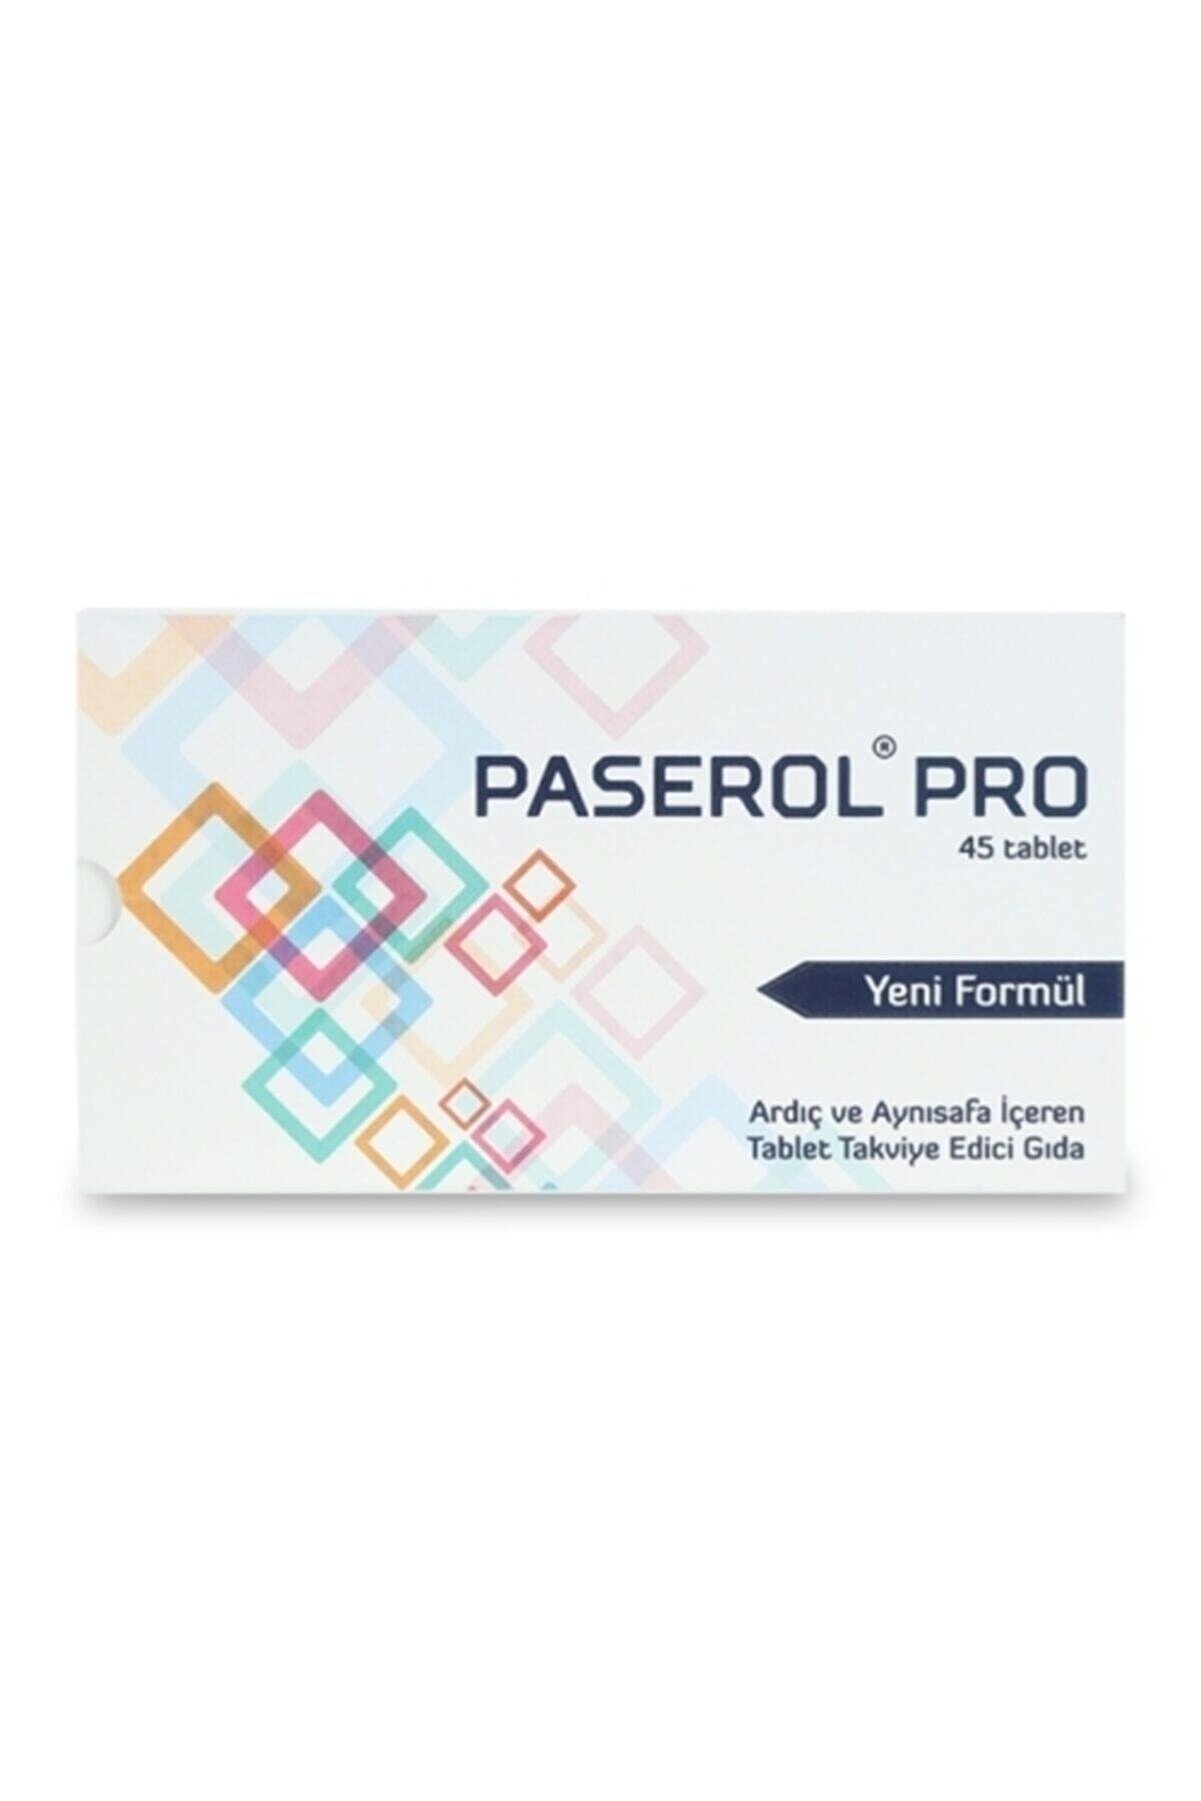 EROĞLU Paserol Pro 45 Tablet Yeni Formül Daha Güçlü